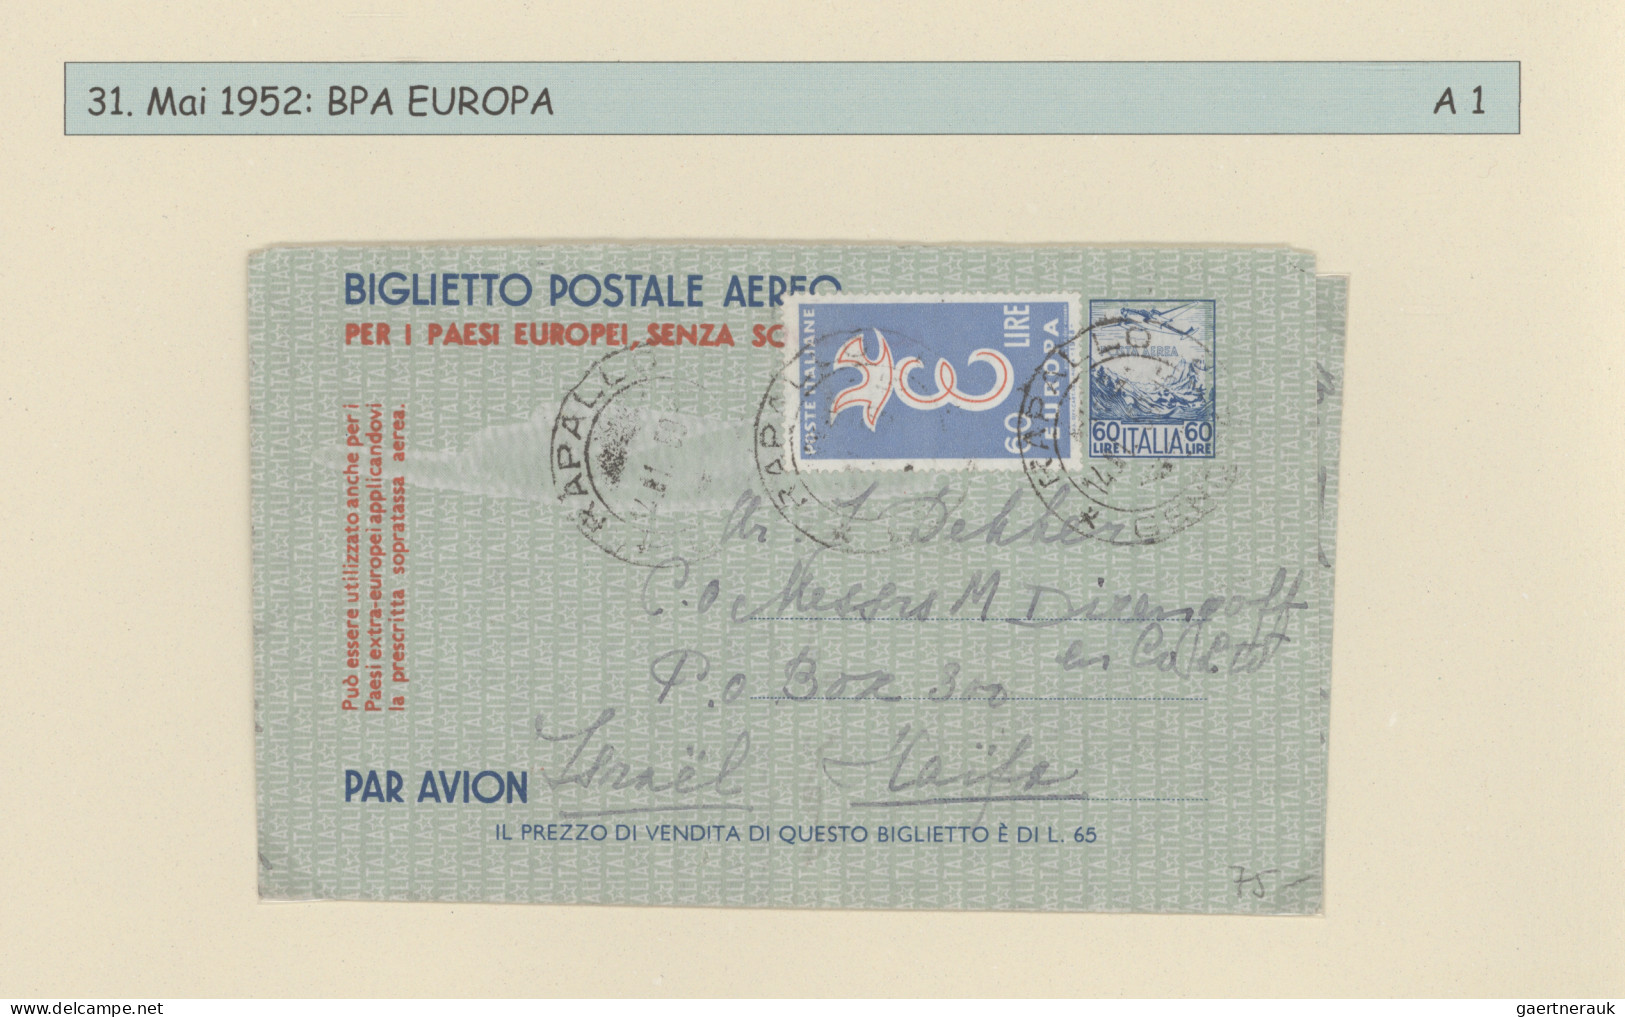 Italy - Postal Stationary: 1874/2000 (ca), six folders postal stationery cards,